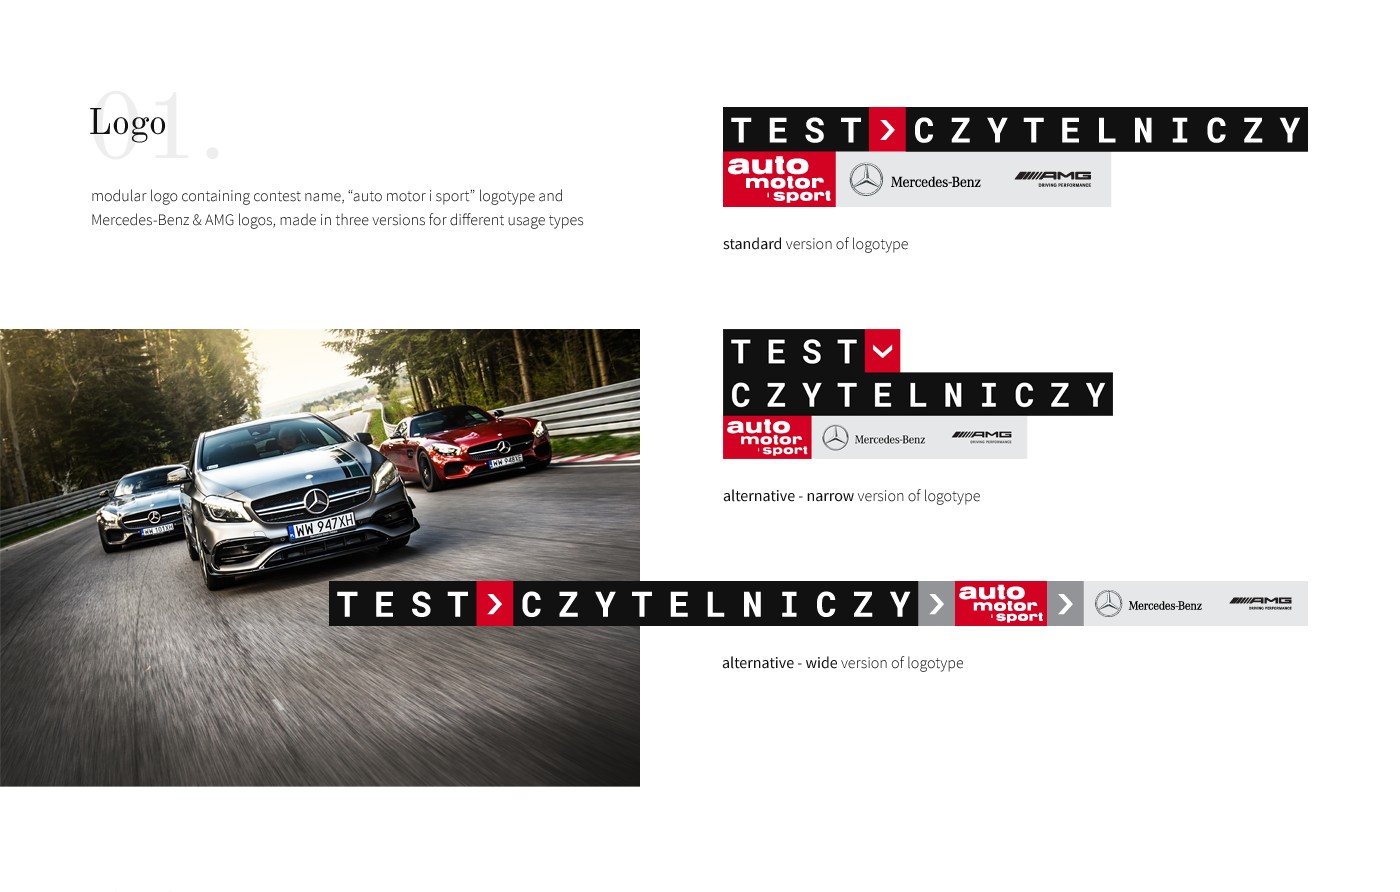 automotive   Motoring mercedes-benz AMG Webdesign test drive